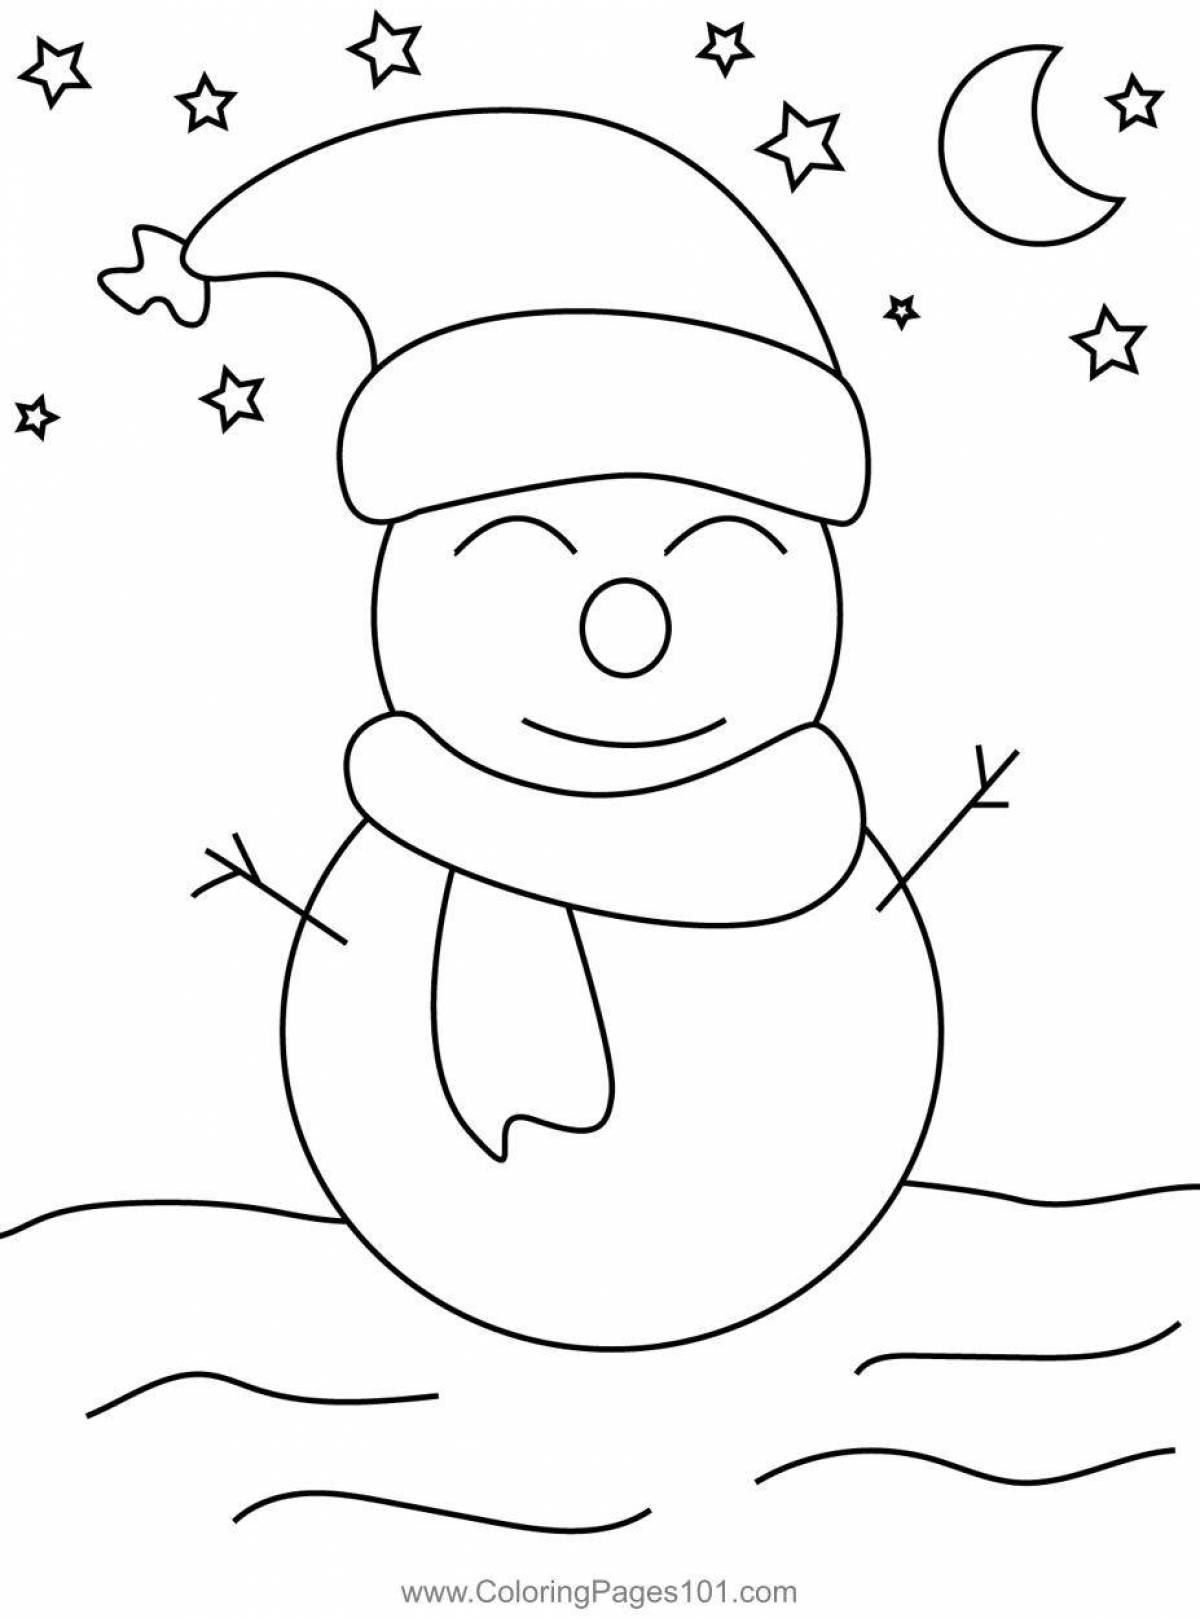 Bright coloring cute snowman